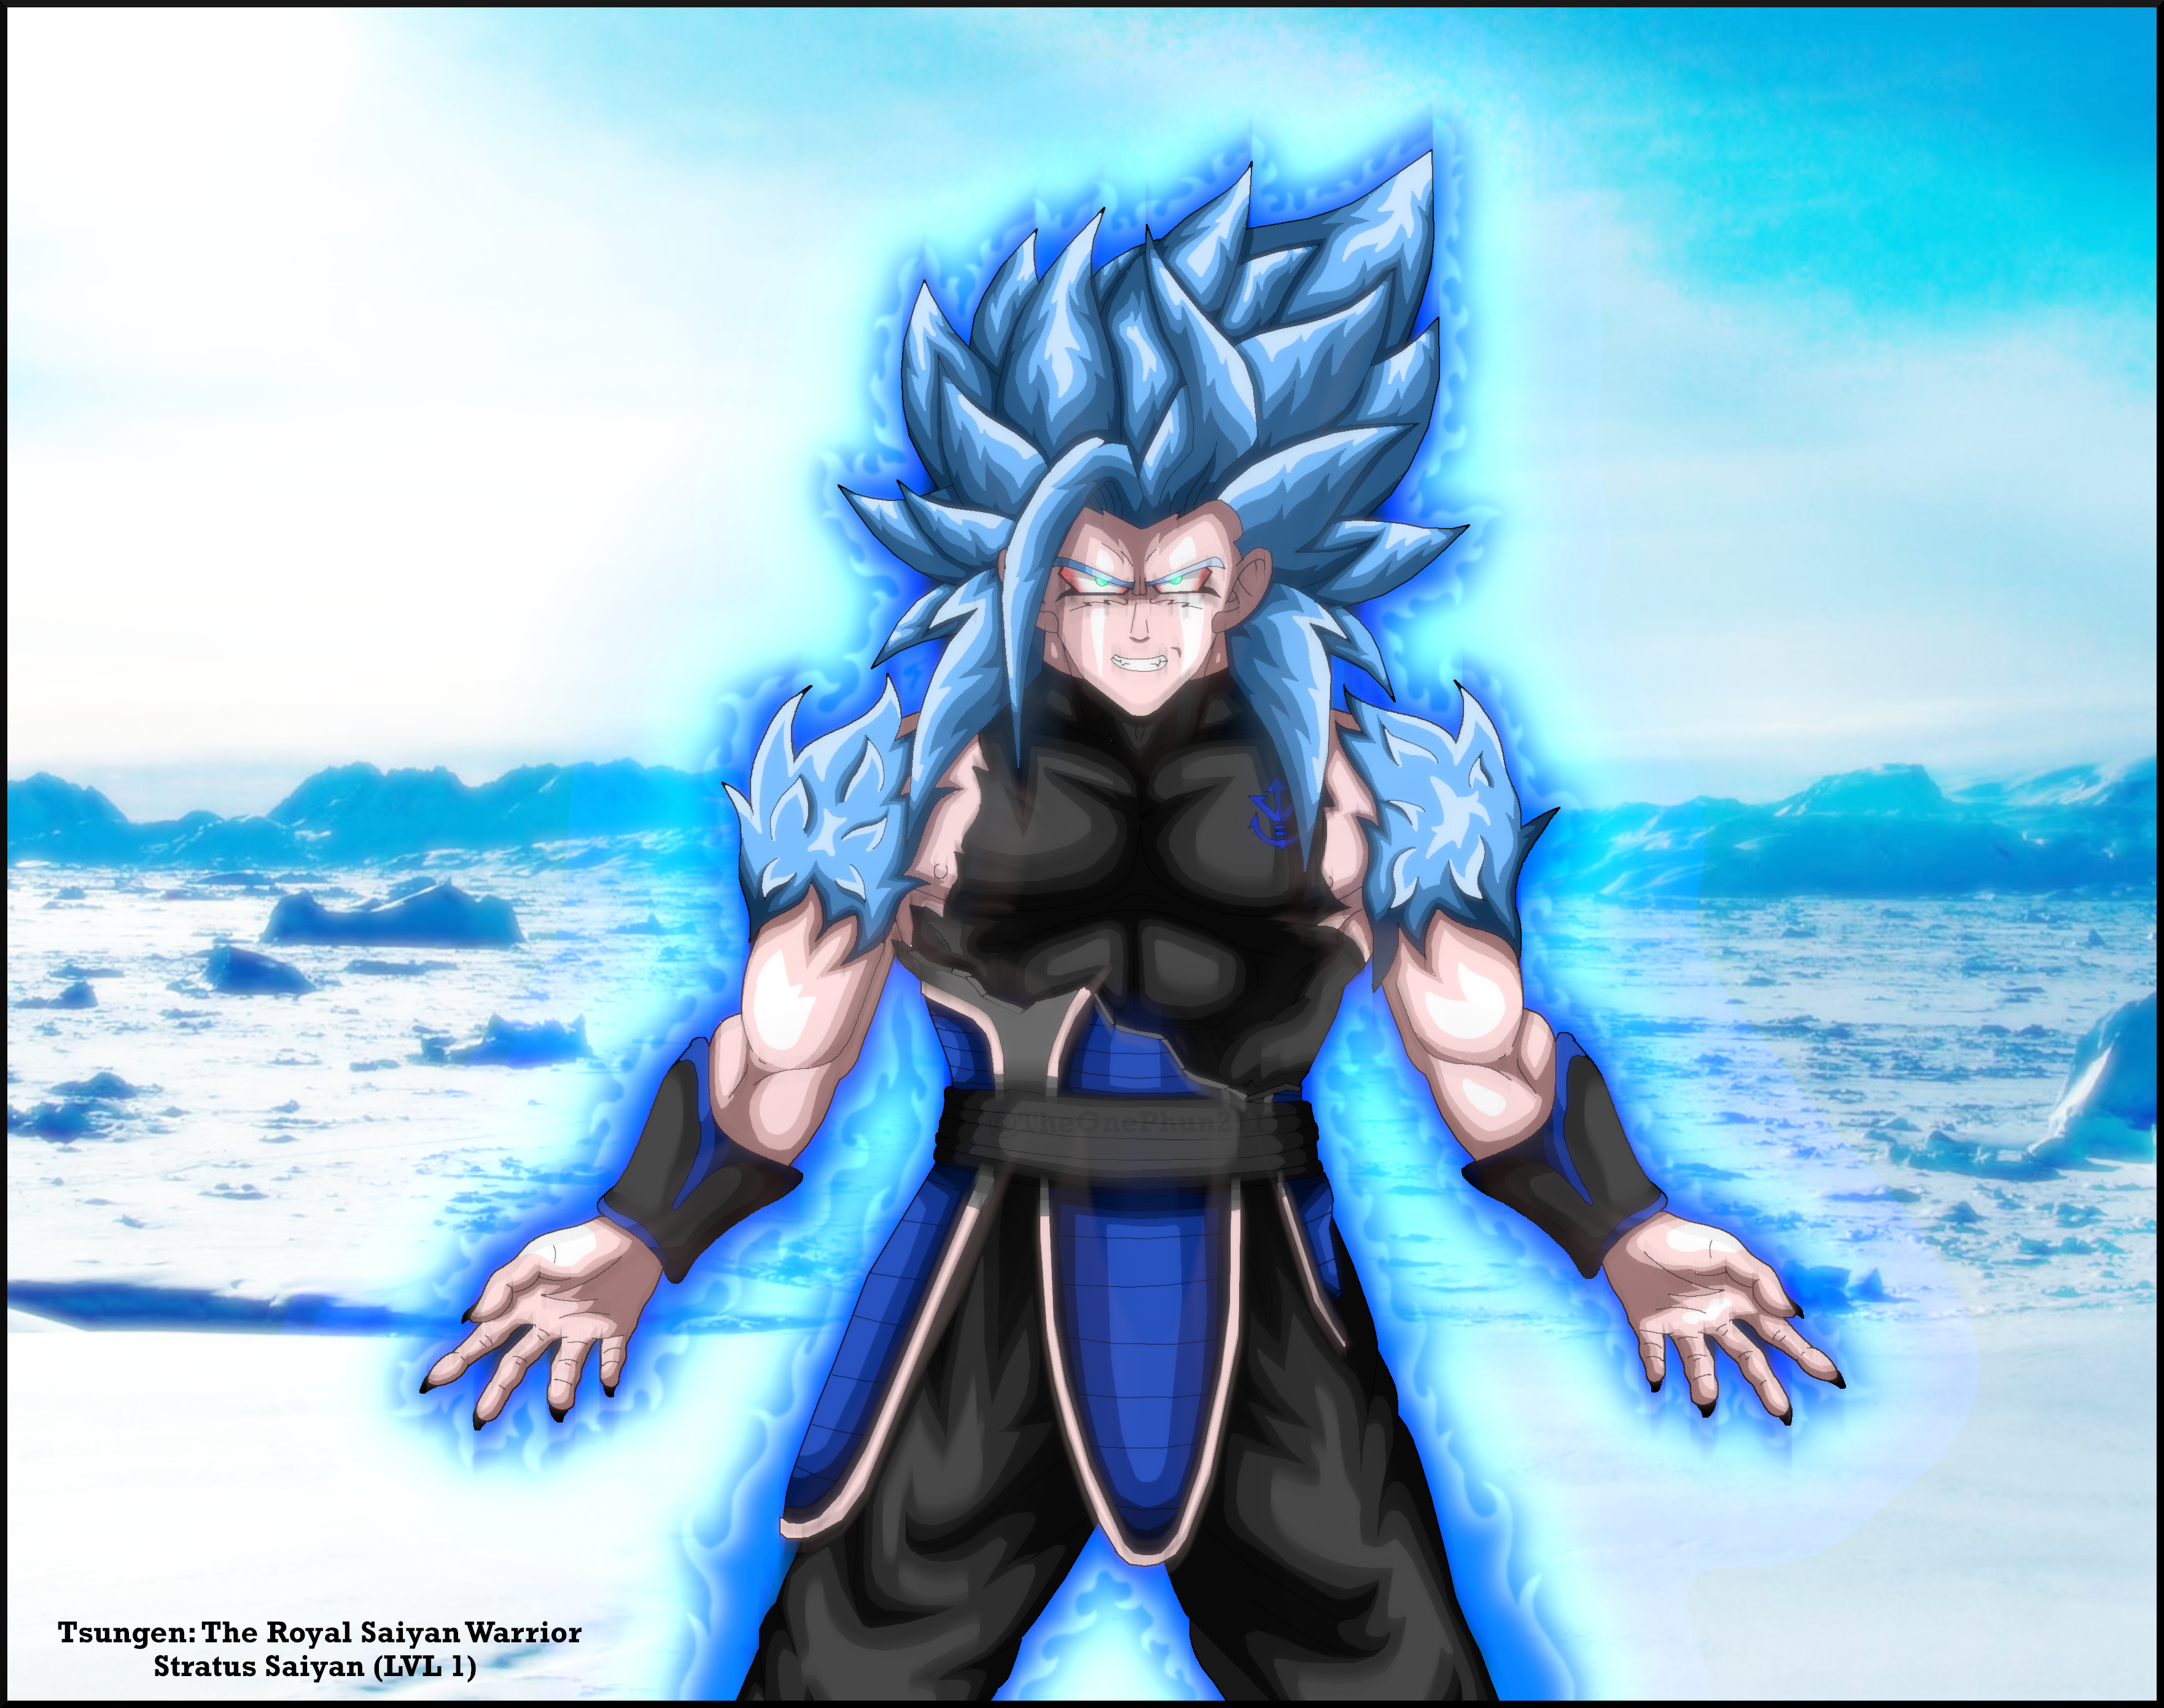 Super Saiyan Blue Goku - Colored (Dragon Ball Supe by Tsukasa112